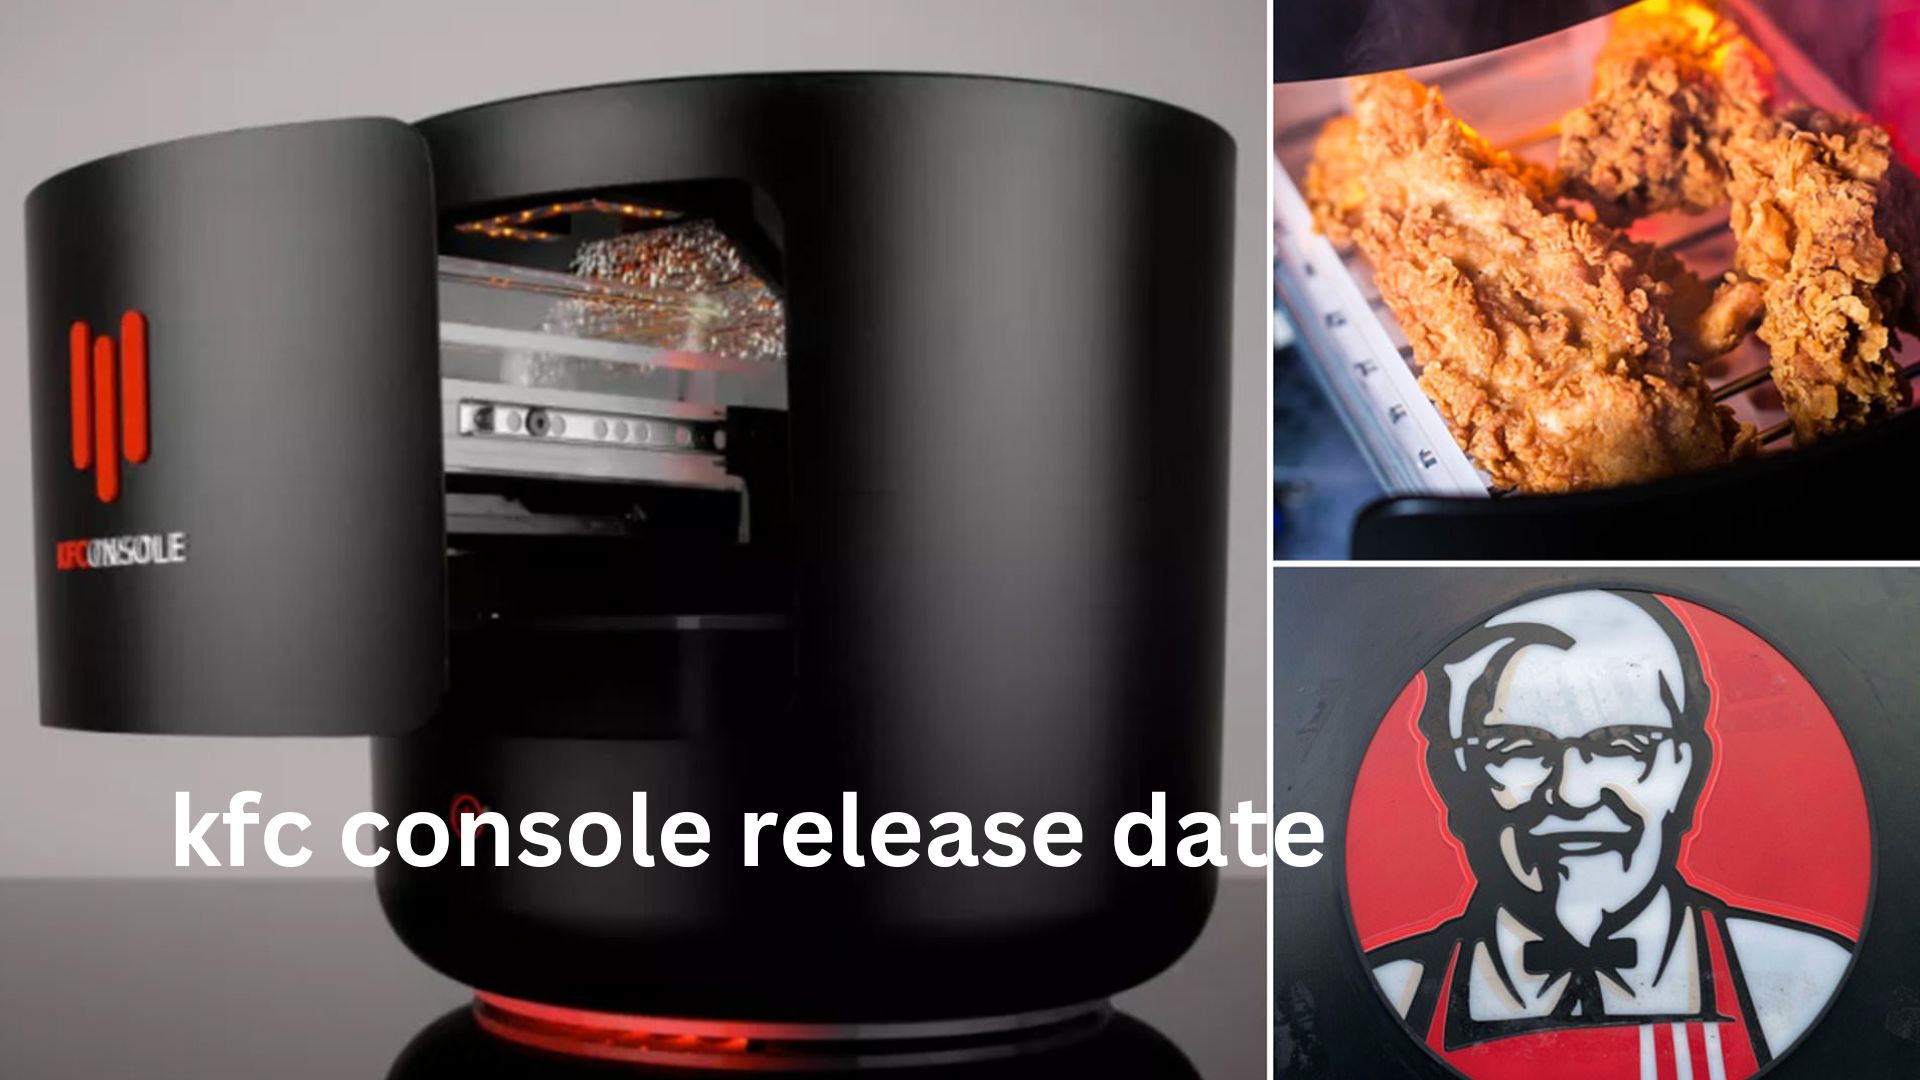 kfc console release date